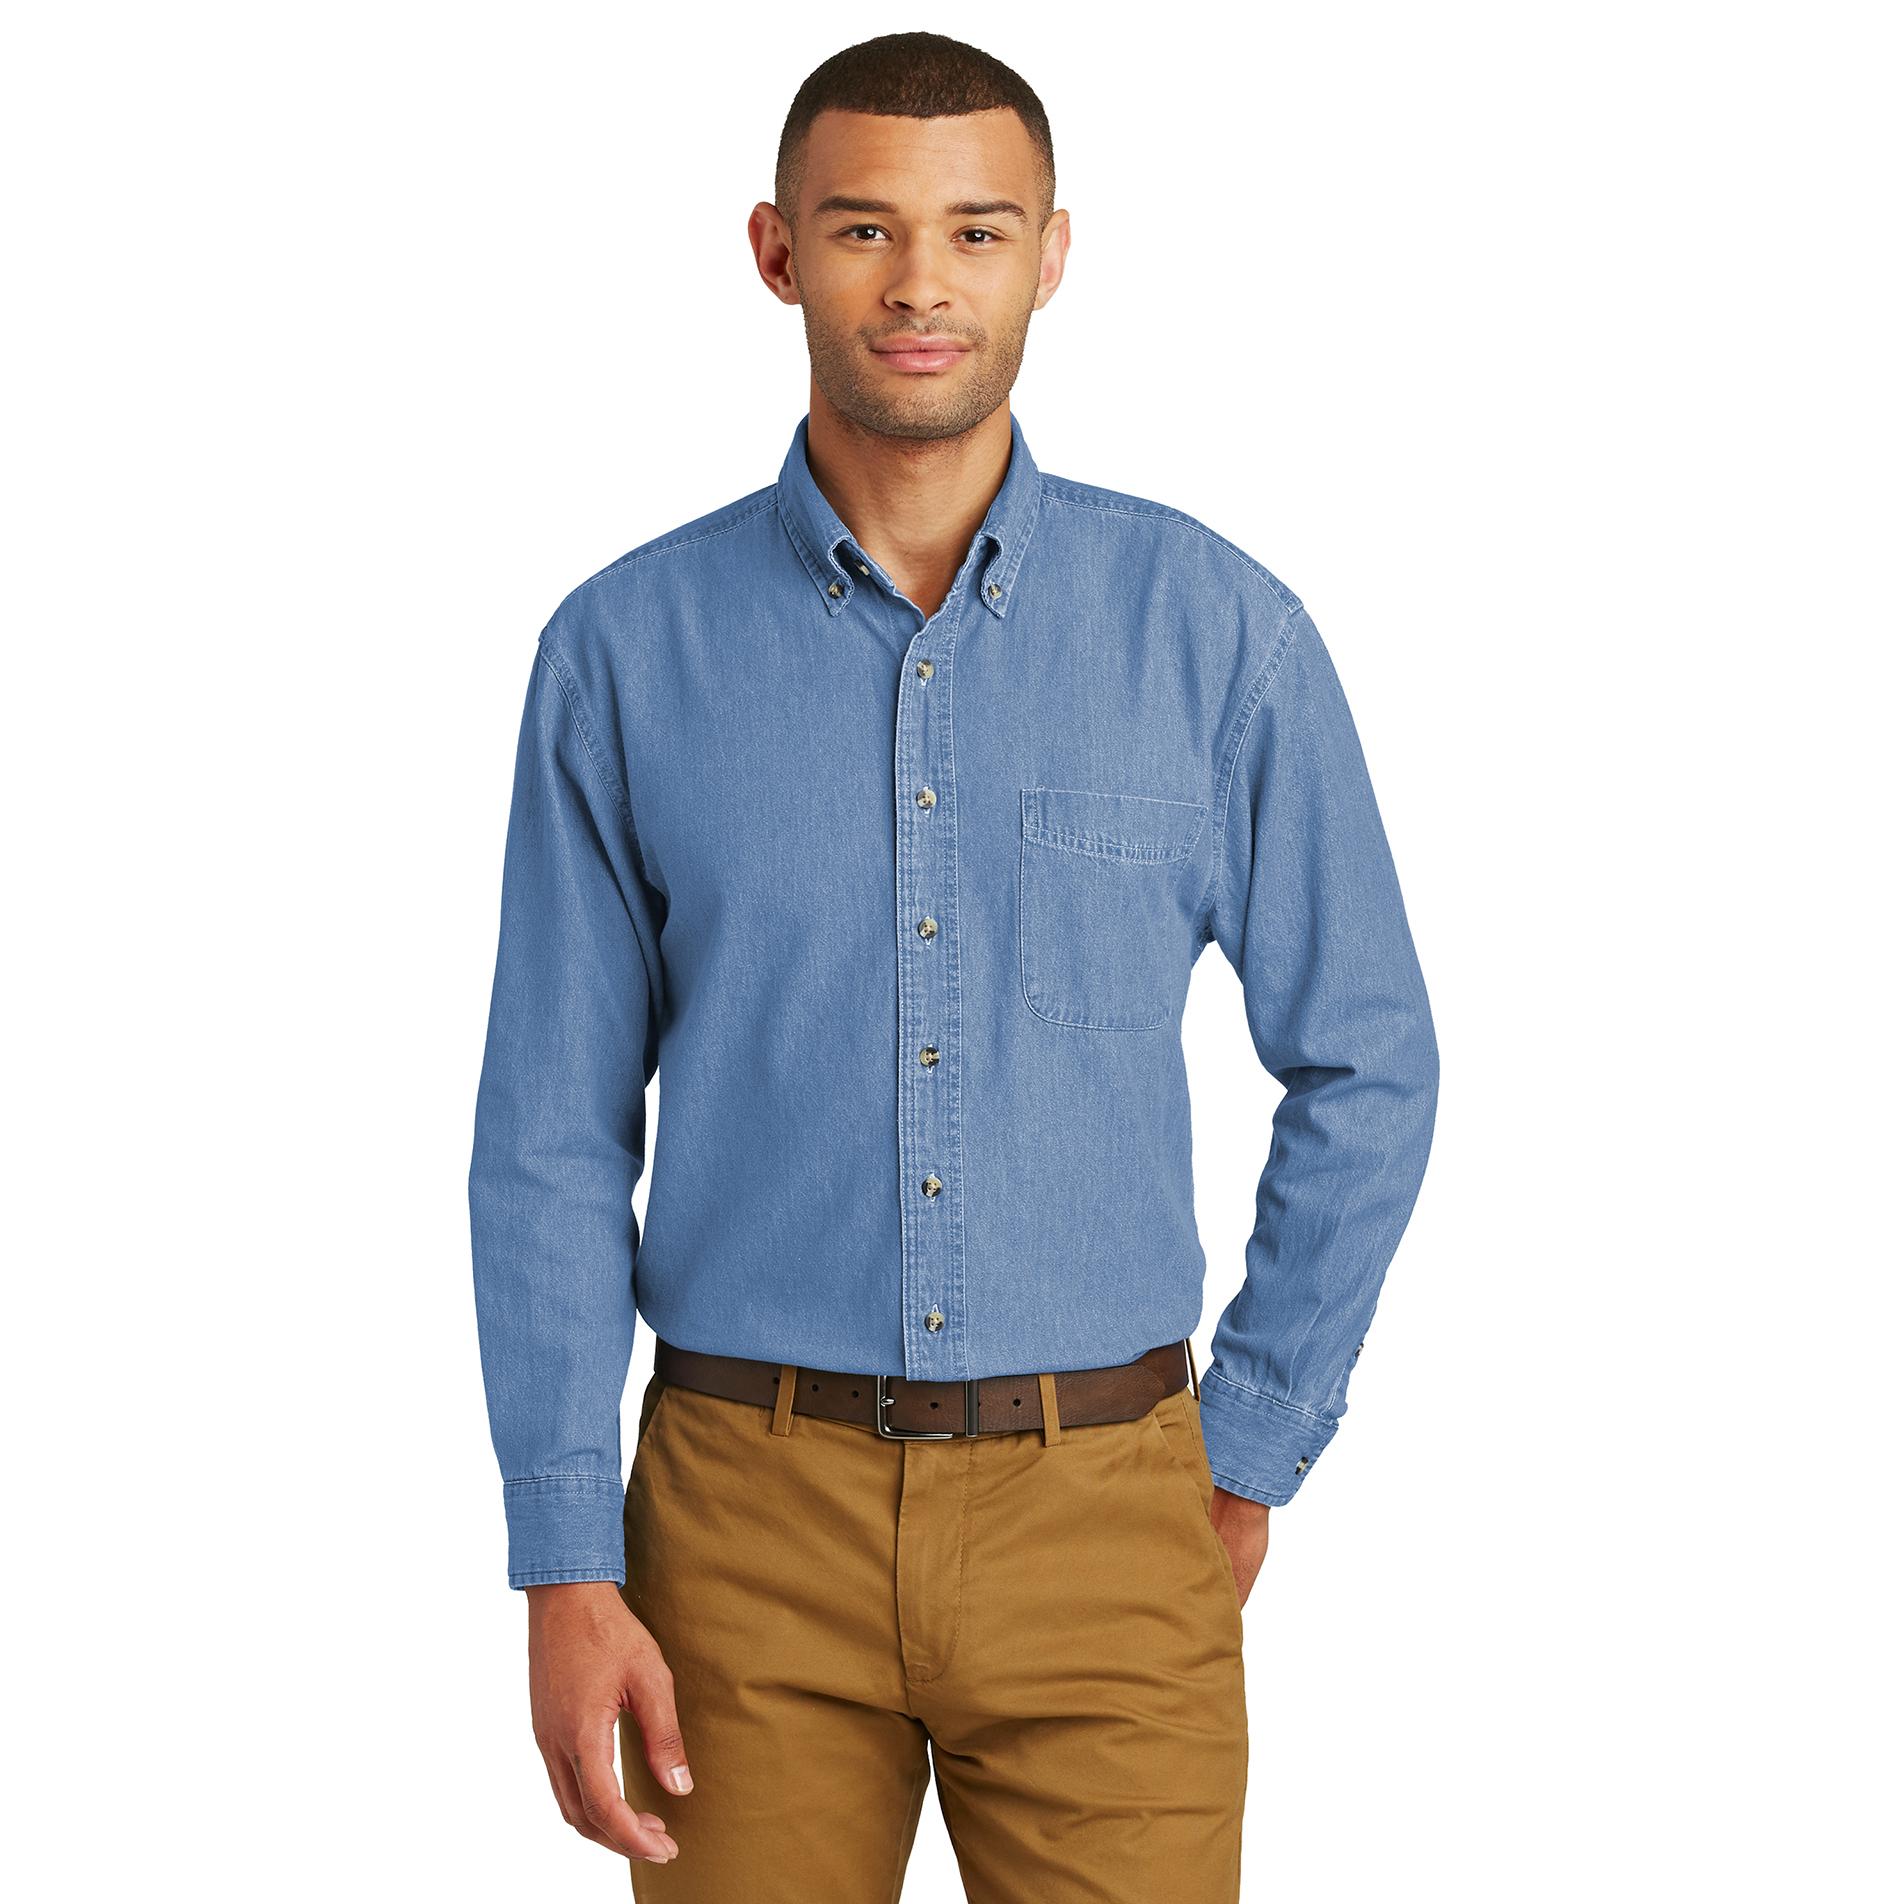 Men's Casual Oxford Shirt Button Down Collar Long Sleeve Shirts Regular Fit RH02